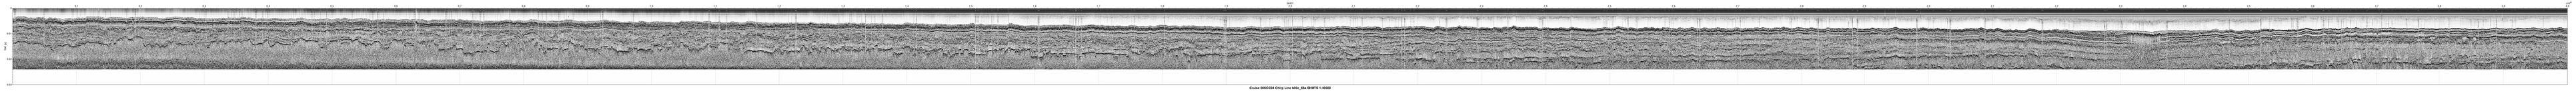 00SCC04 b00c_66a seismic profile image